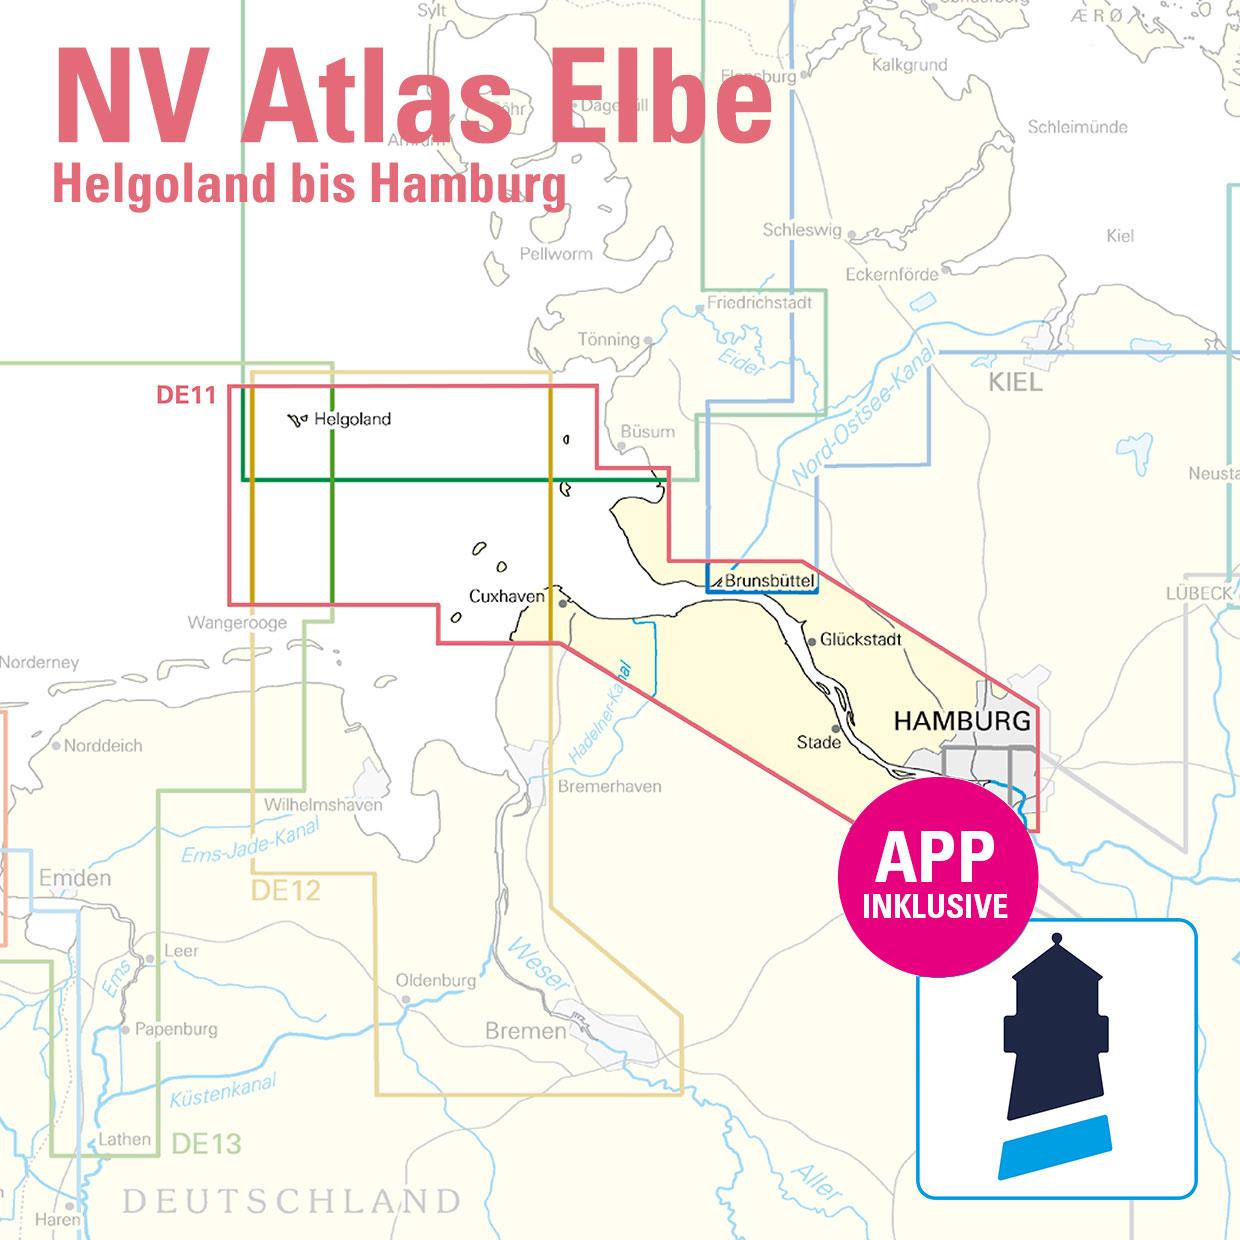 NV Atlas Elbe DE11 - Helgoland bis Hamburg